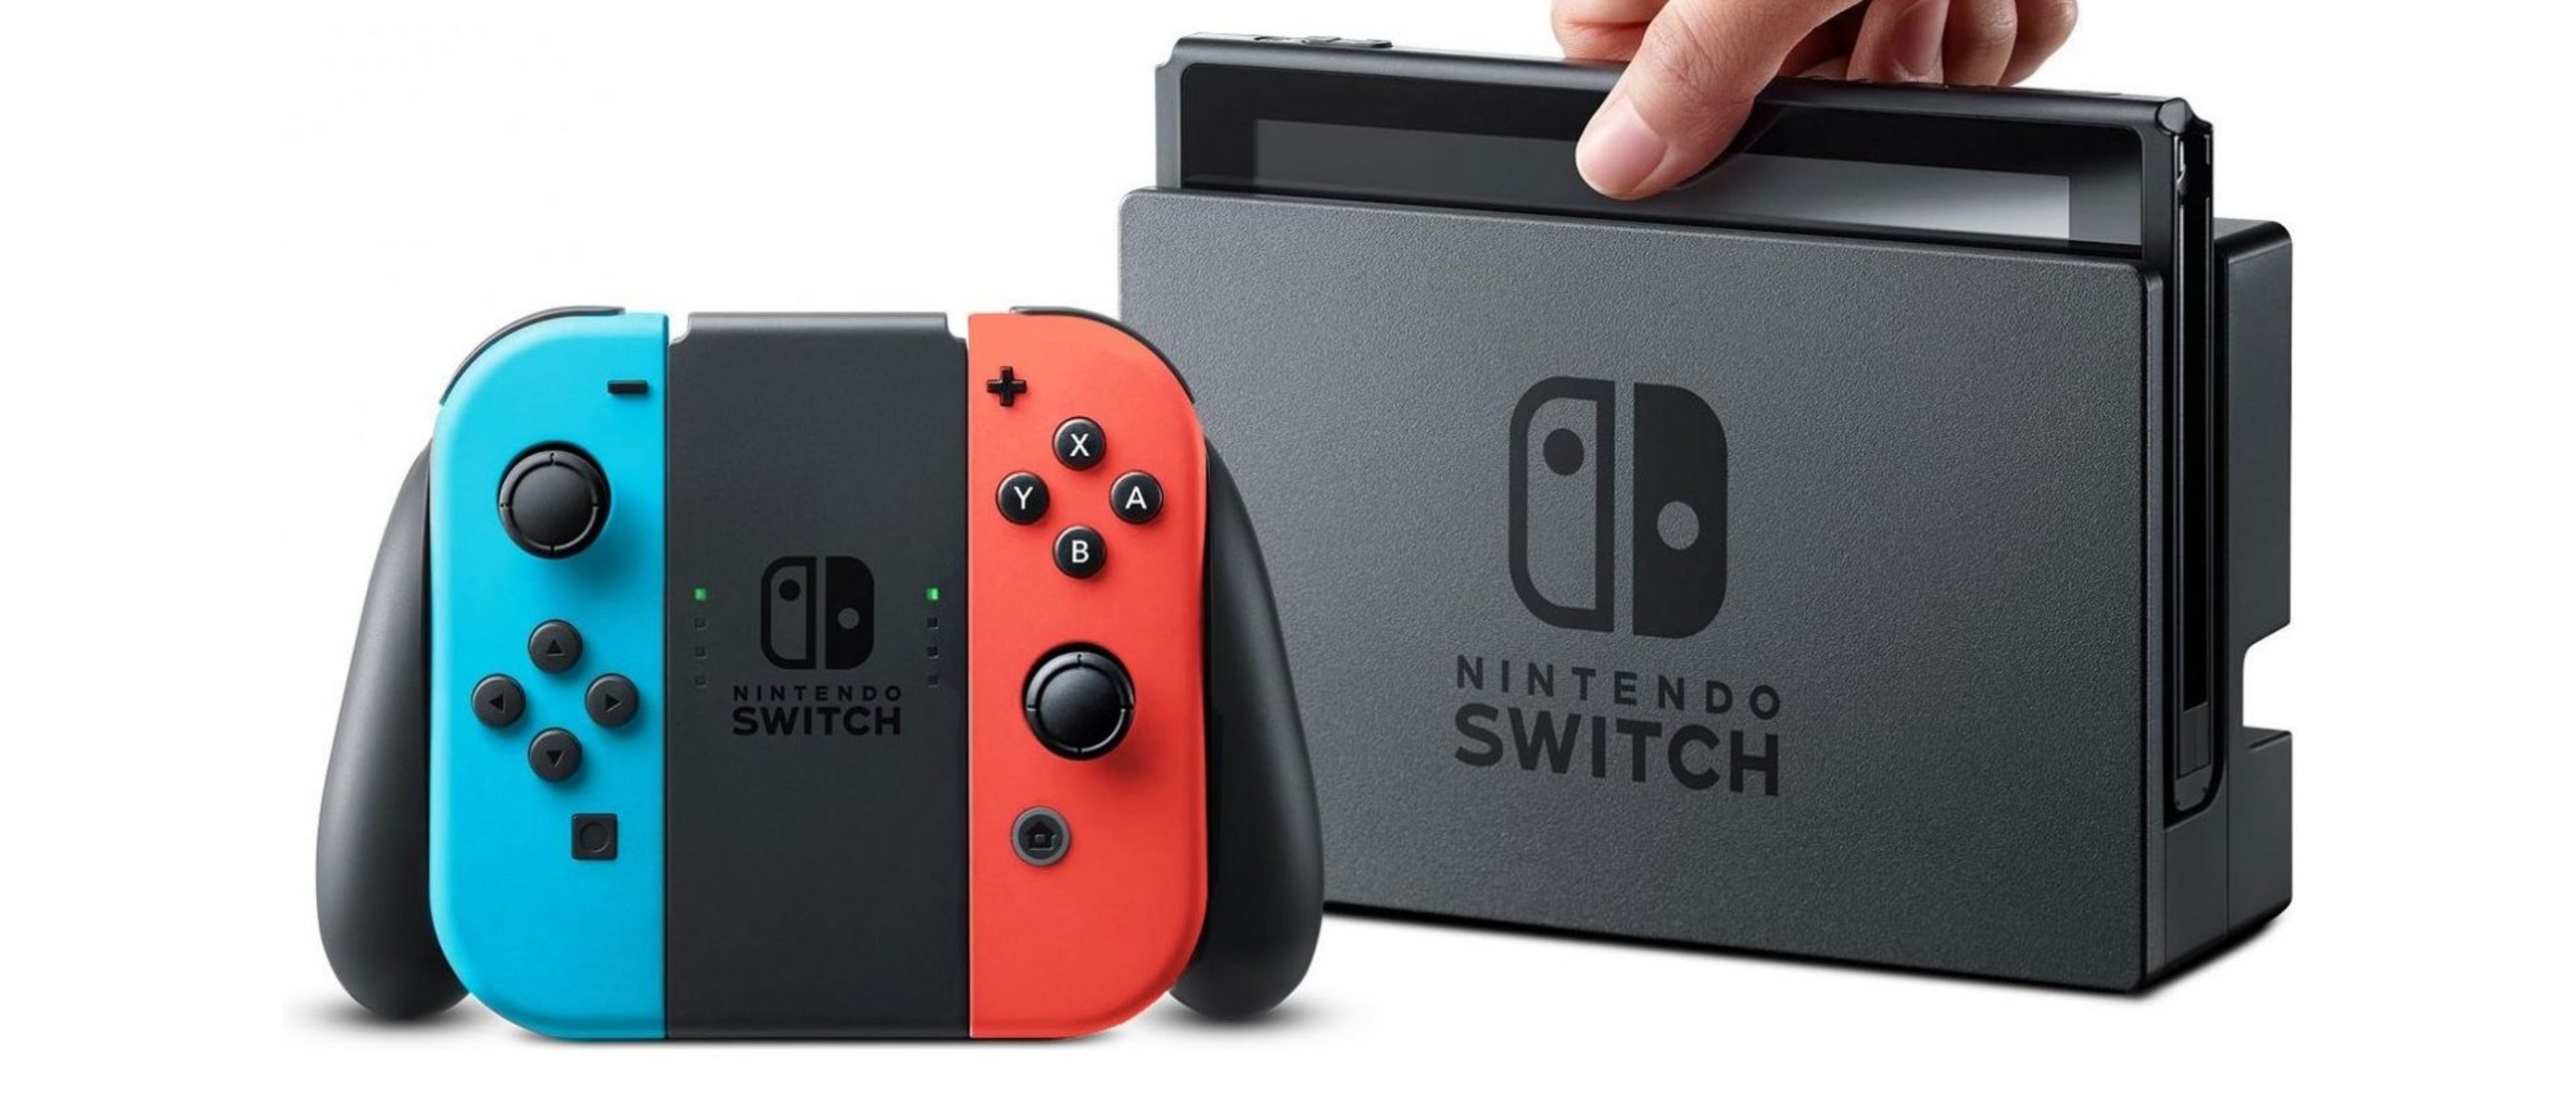 Последний nintendo switch. Игровая приставка Nintendo Switch OLED. Нинтендо свитч Нинтендо свитч. Nintendo Switch Rev 2. Игровая приставка Nintendo Switch New.